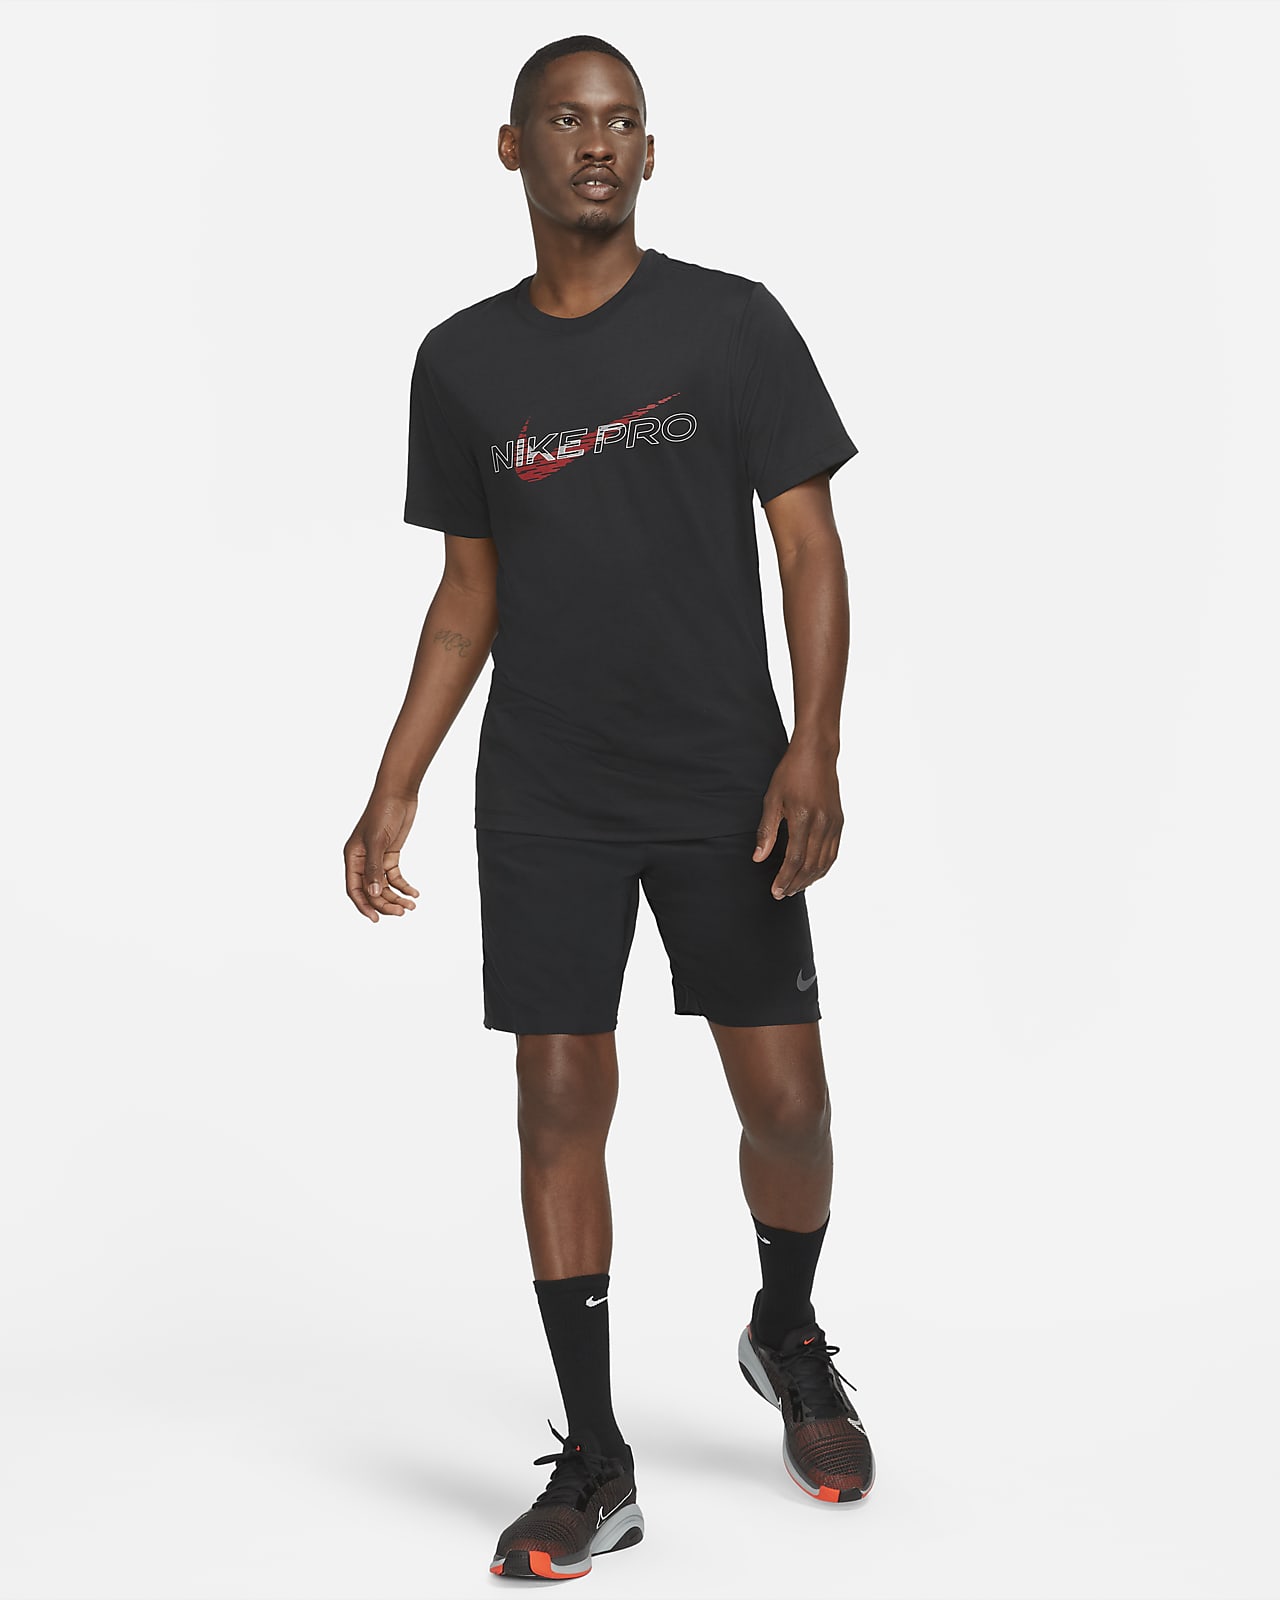 Nike Pro Men's Compression Training Shorts 703086-091 Size 2XL